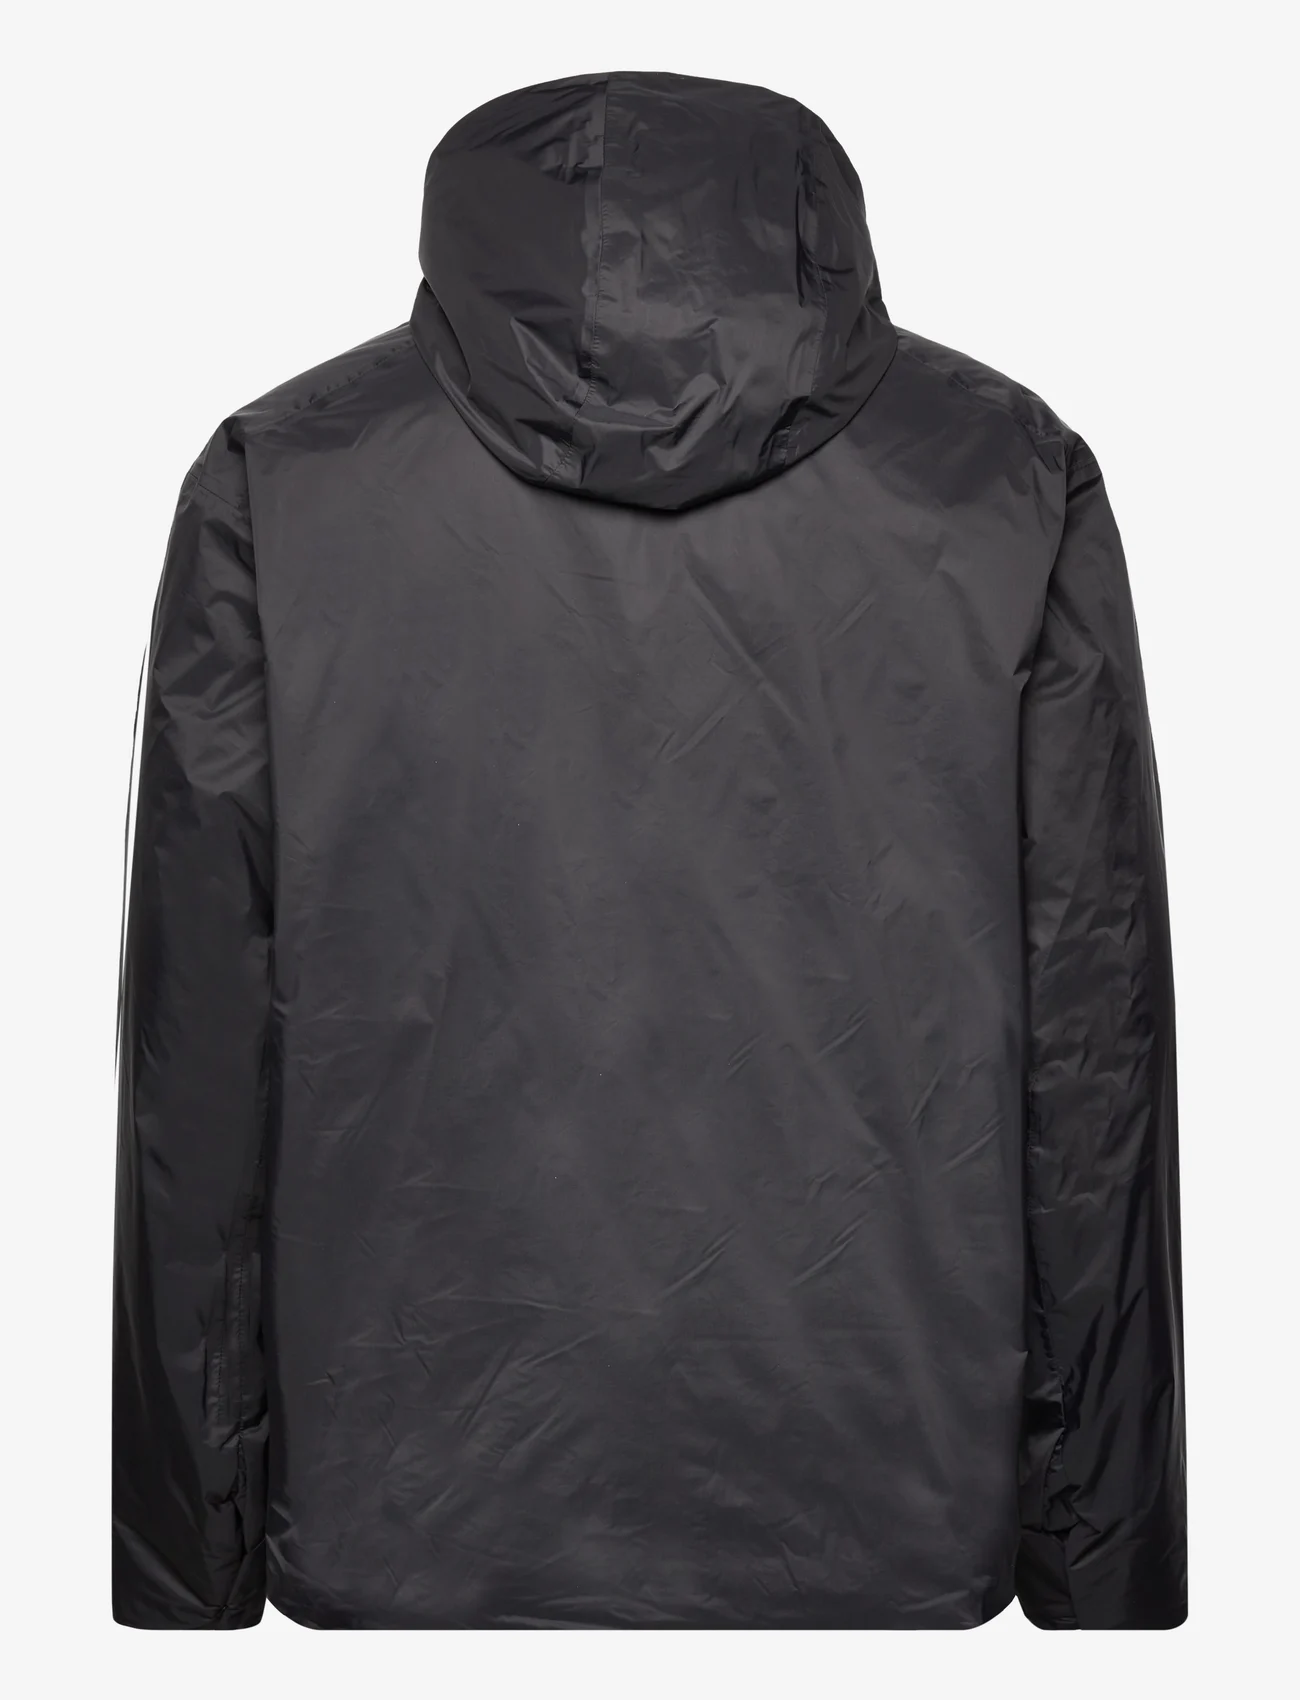 Tenson - Transition Jacket Men - regnjackor - black - 1